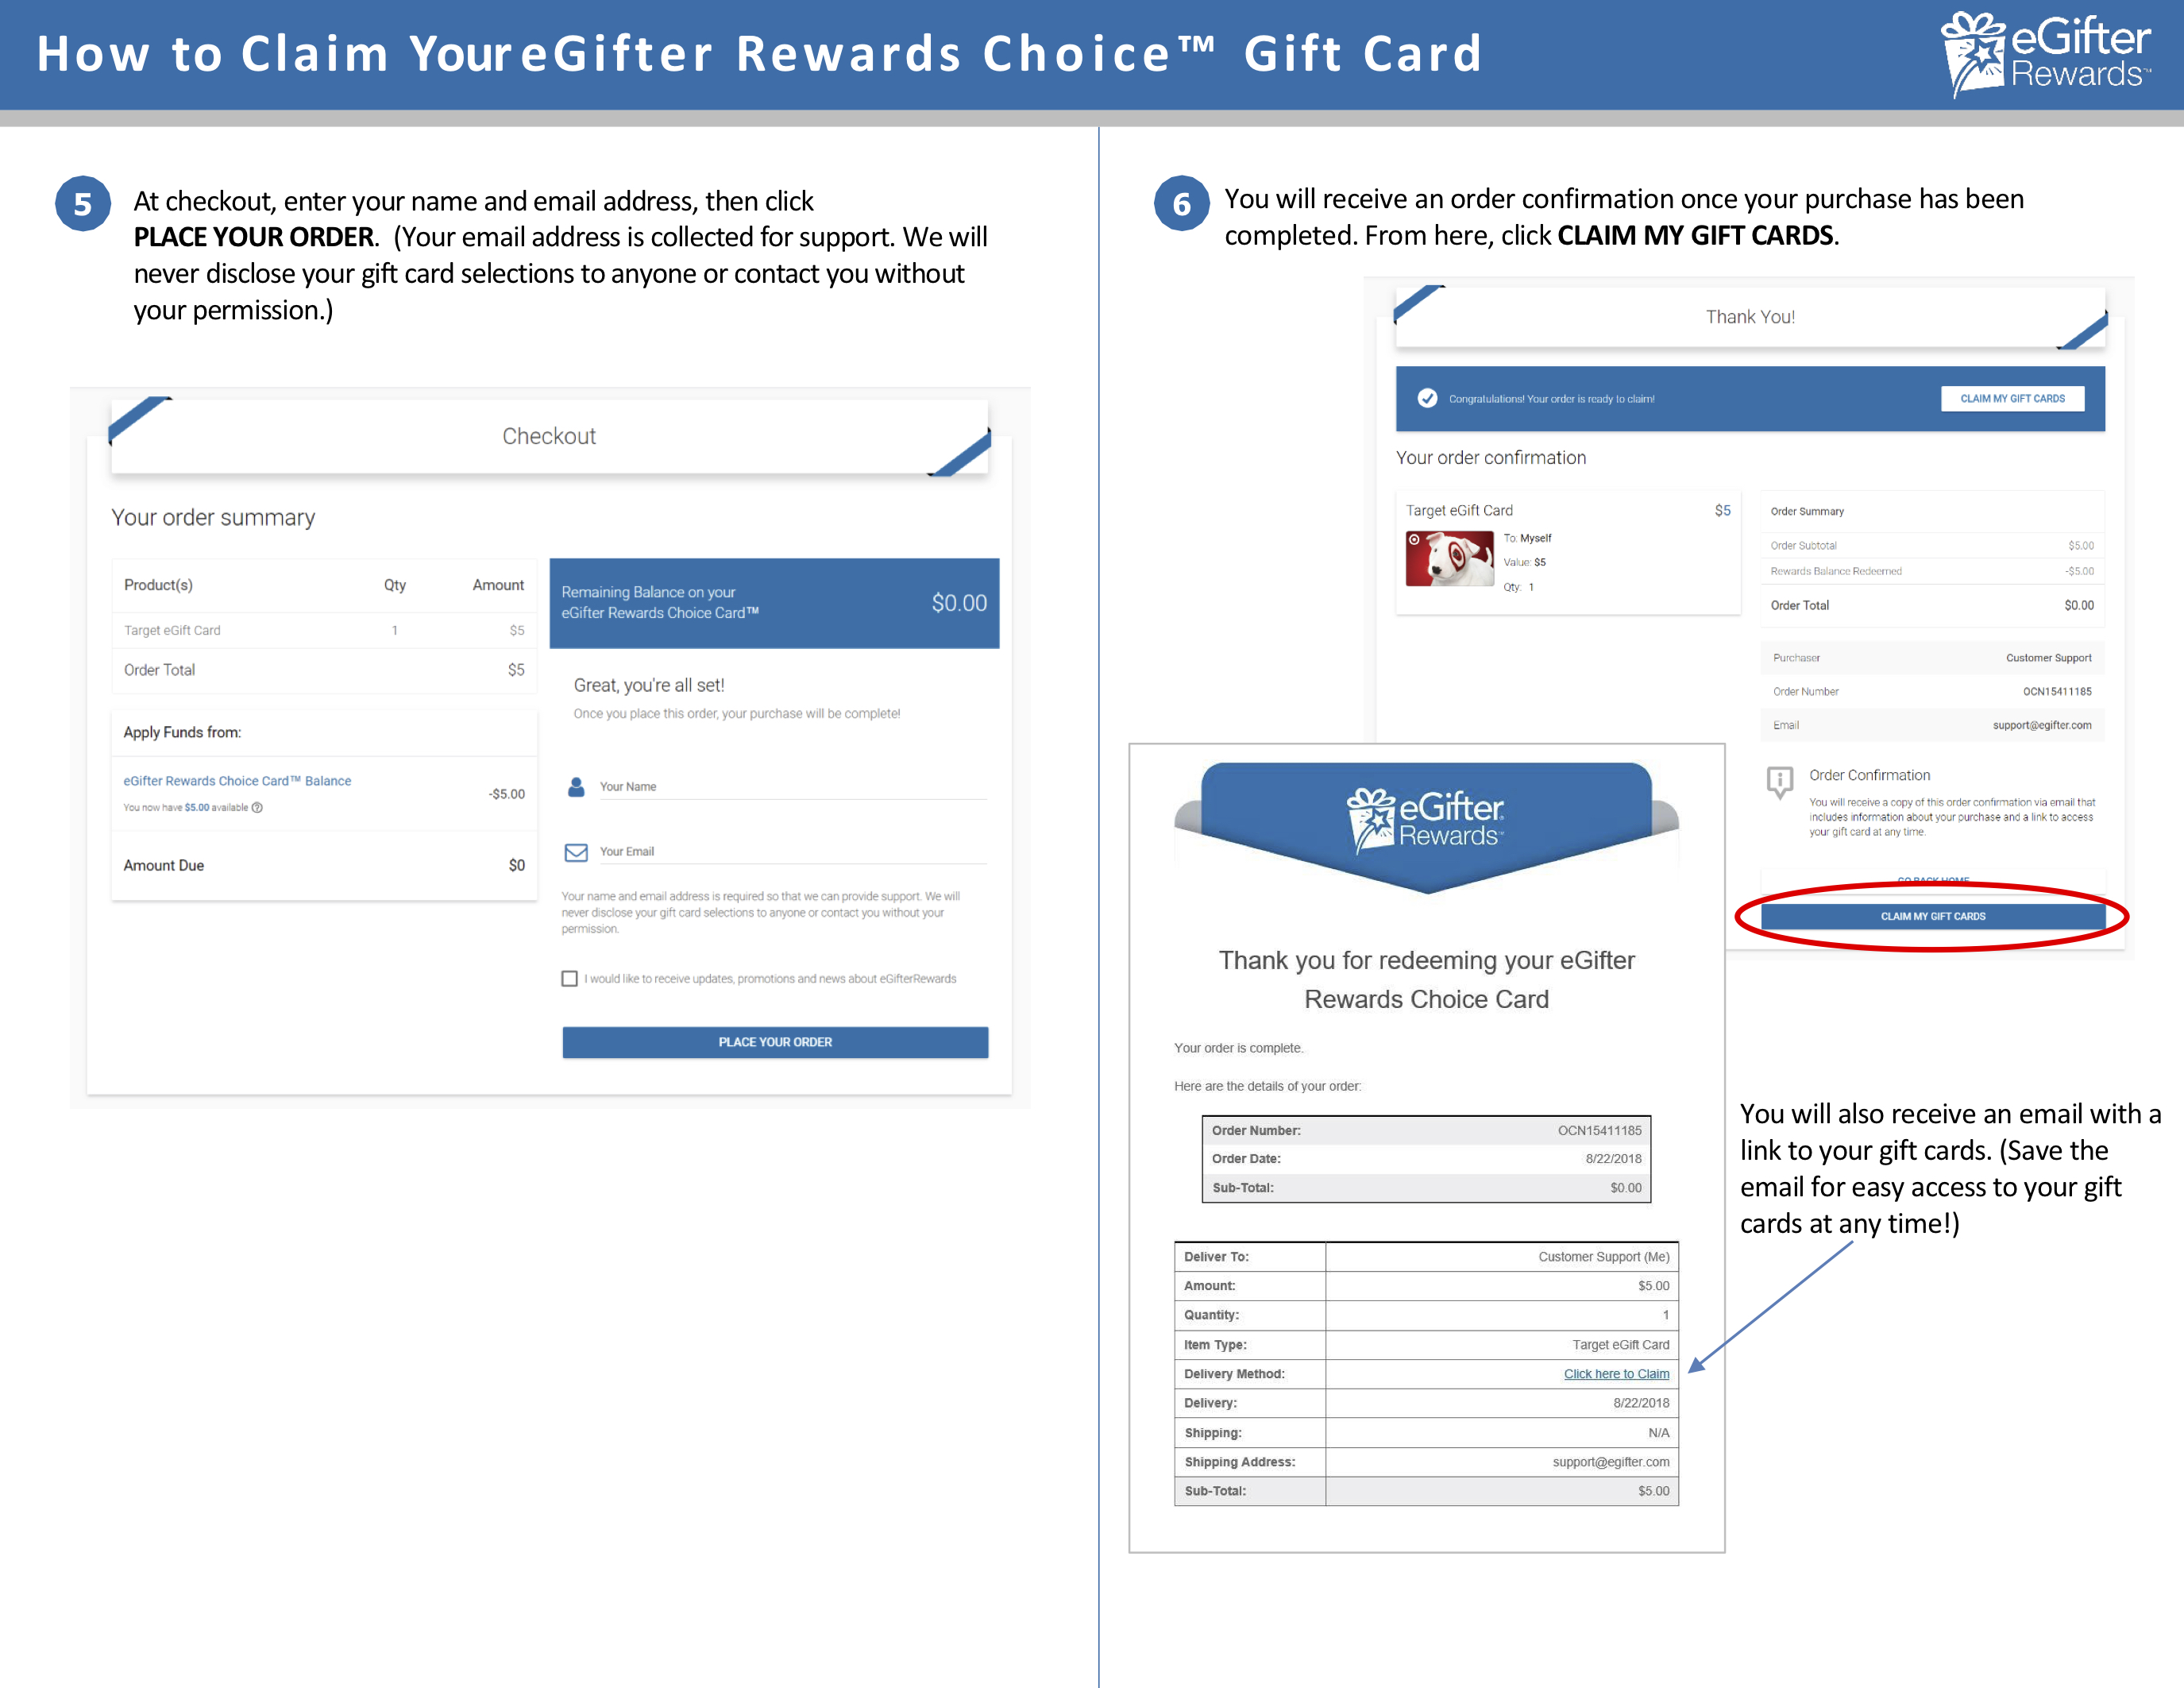 How To Redeem Your Egifter Rewards Choice Card Egifter Help